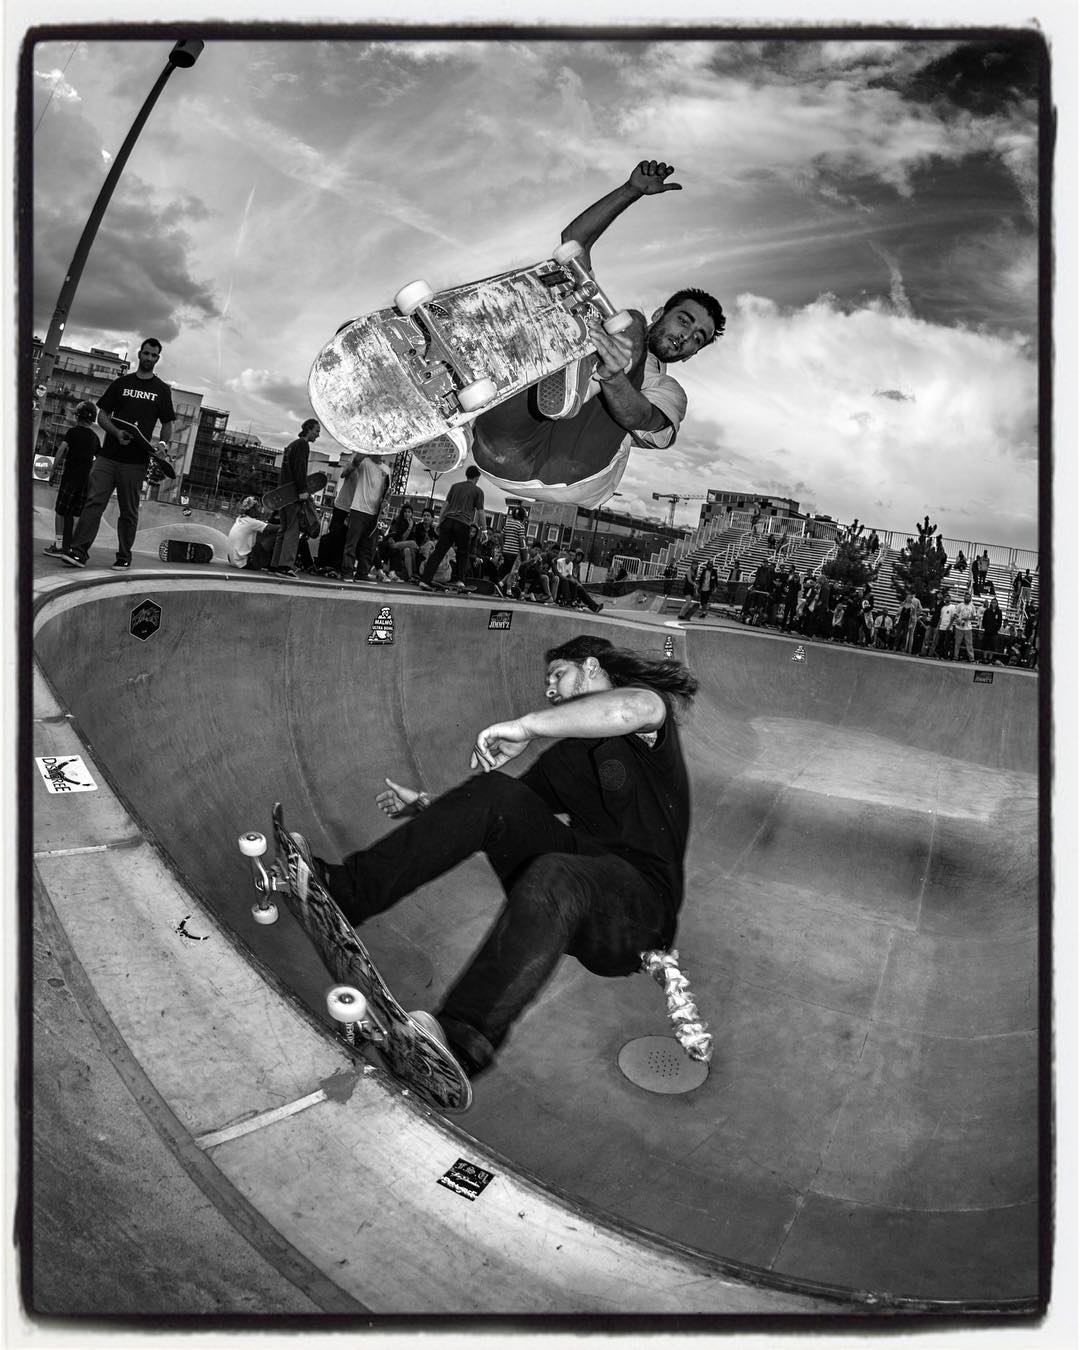 #flashbackfriday Double trouble with Ruari Britee hanging a lien air over Tim Biksterveld's grind at Ultra Bowl VI, Malmö, SE,2014. #skateboarding #pool #bowl #ultrabowl #skatemalmo #concrete #bailgun #gerdriegerphotography